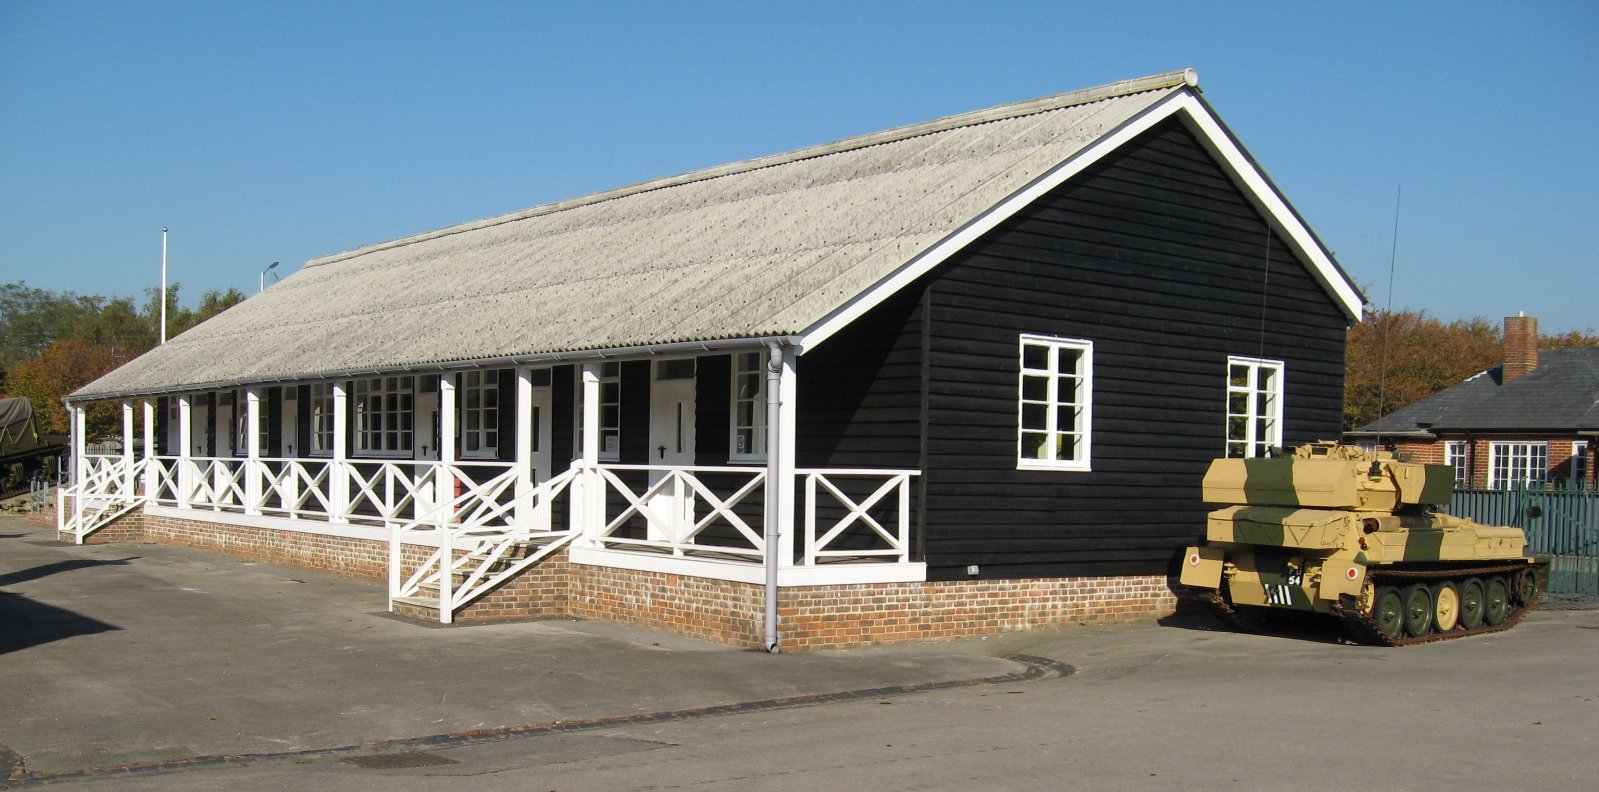 Queen Elizabeth Barracks, Church Crookham